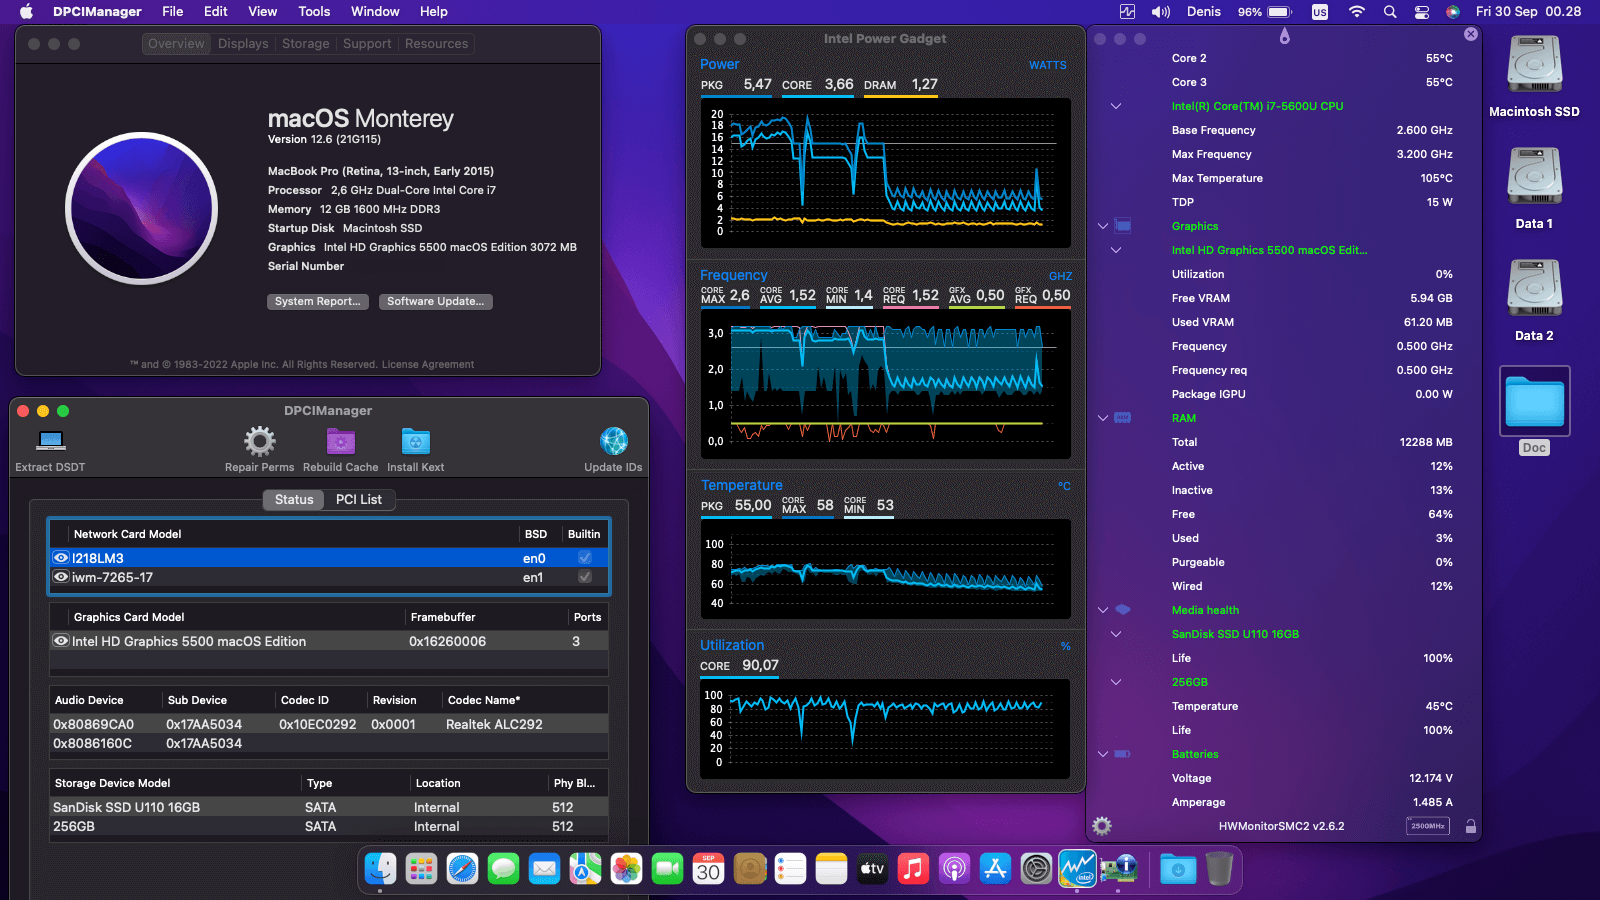 Success Hackintosh macOS Monterey 12.6 Build 21G115 in Lenovo Thinkpad T450